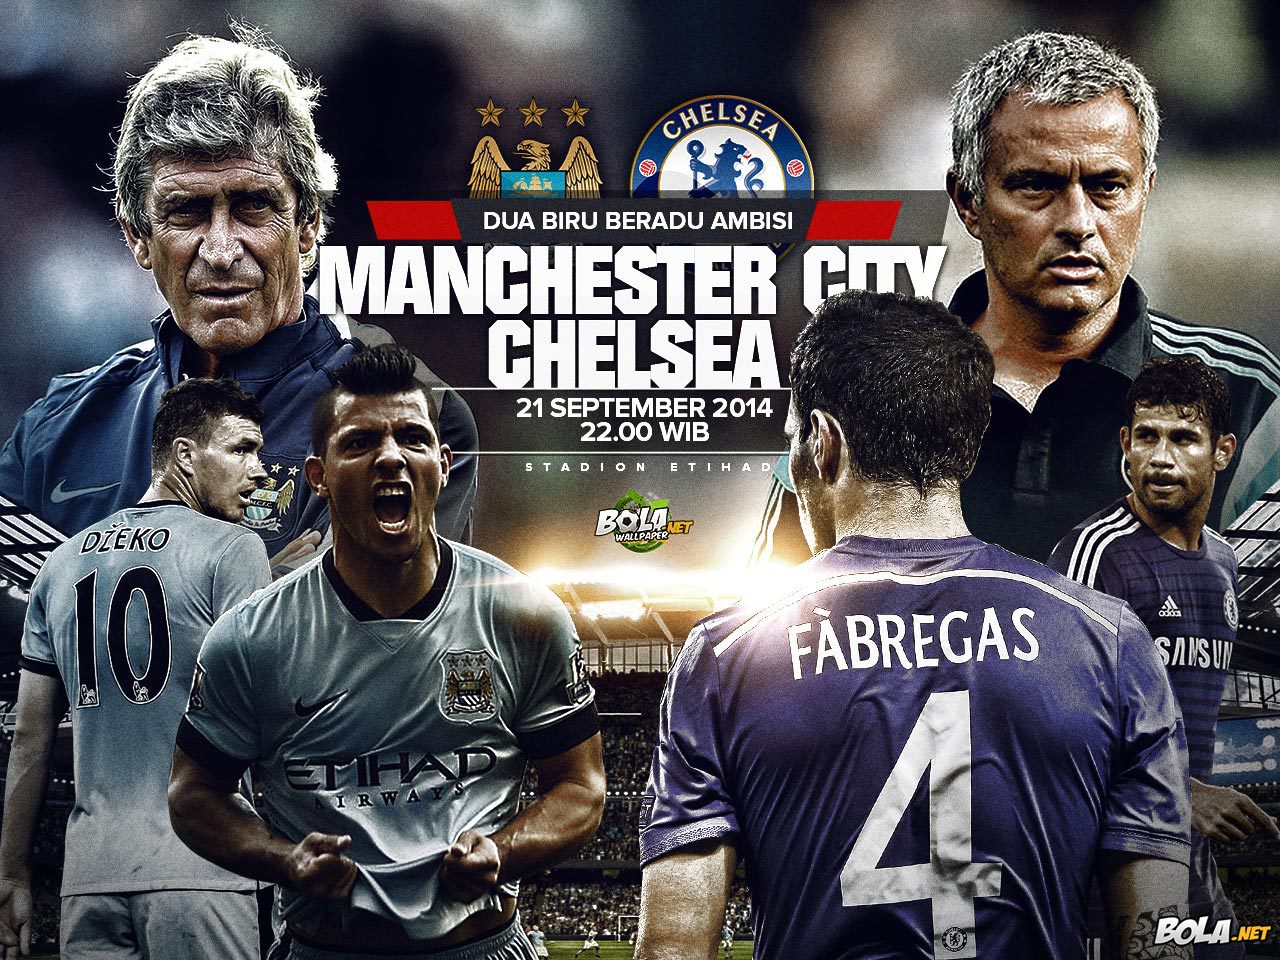 Download Wallpaper Manchester City Vs Chelsea Bolanet